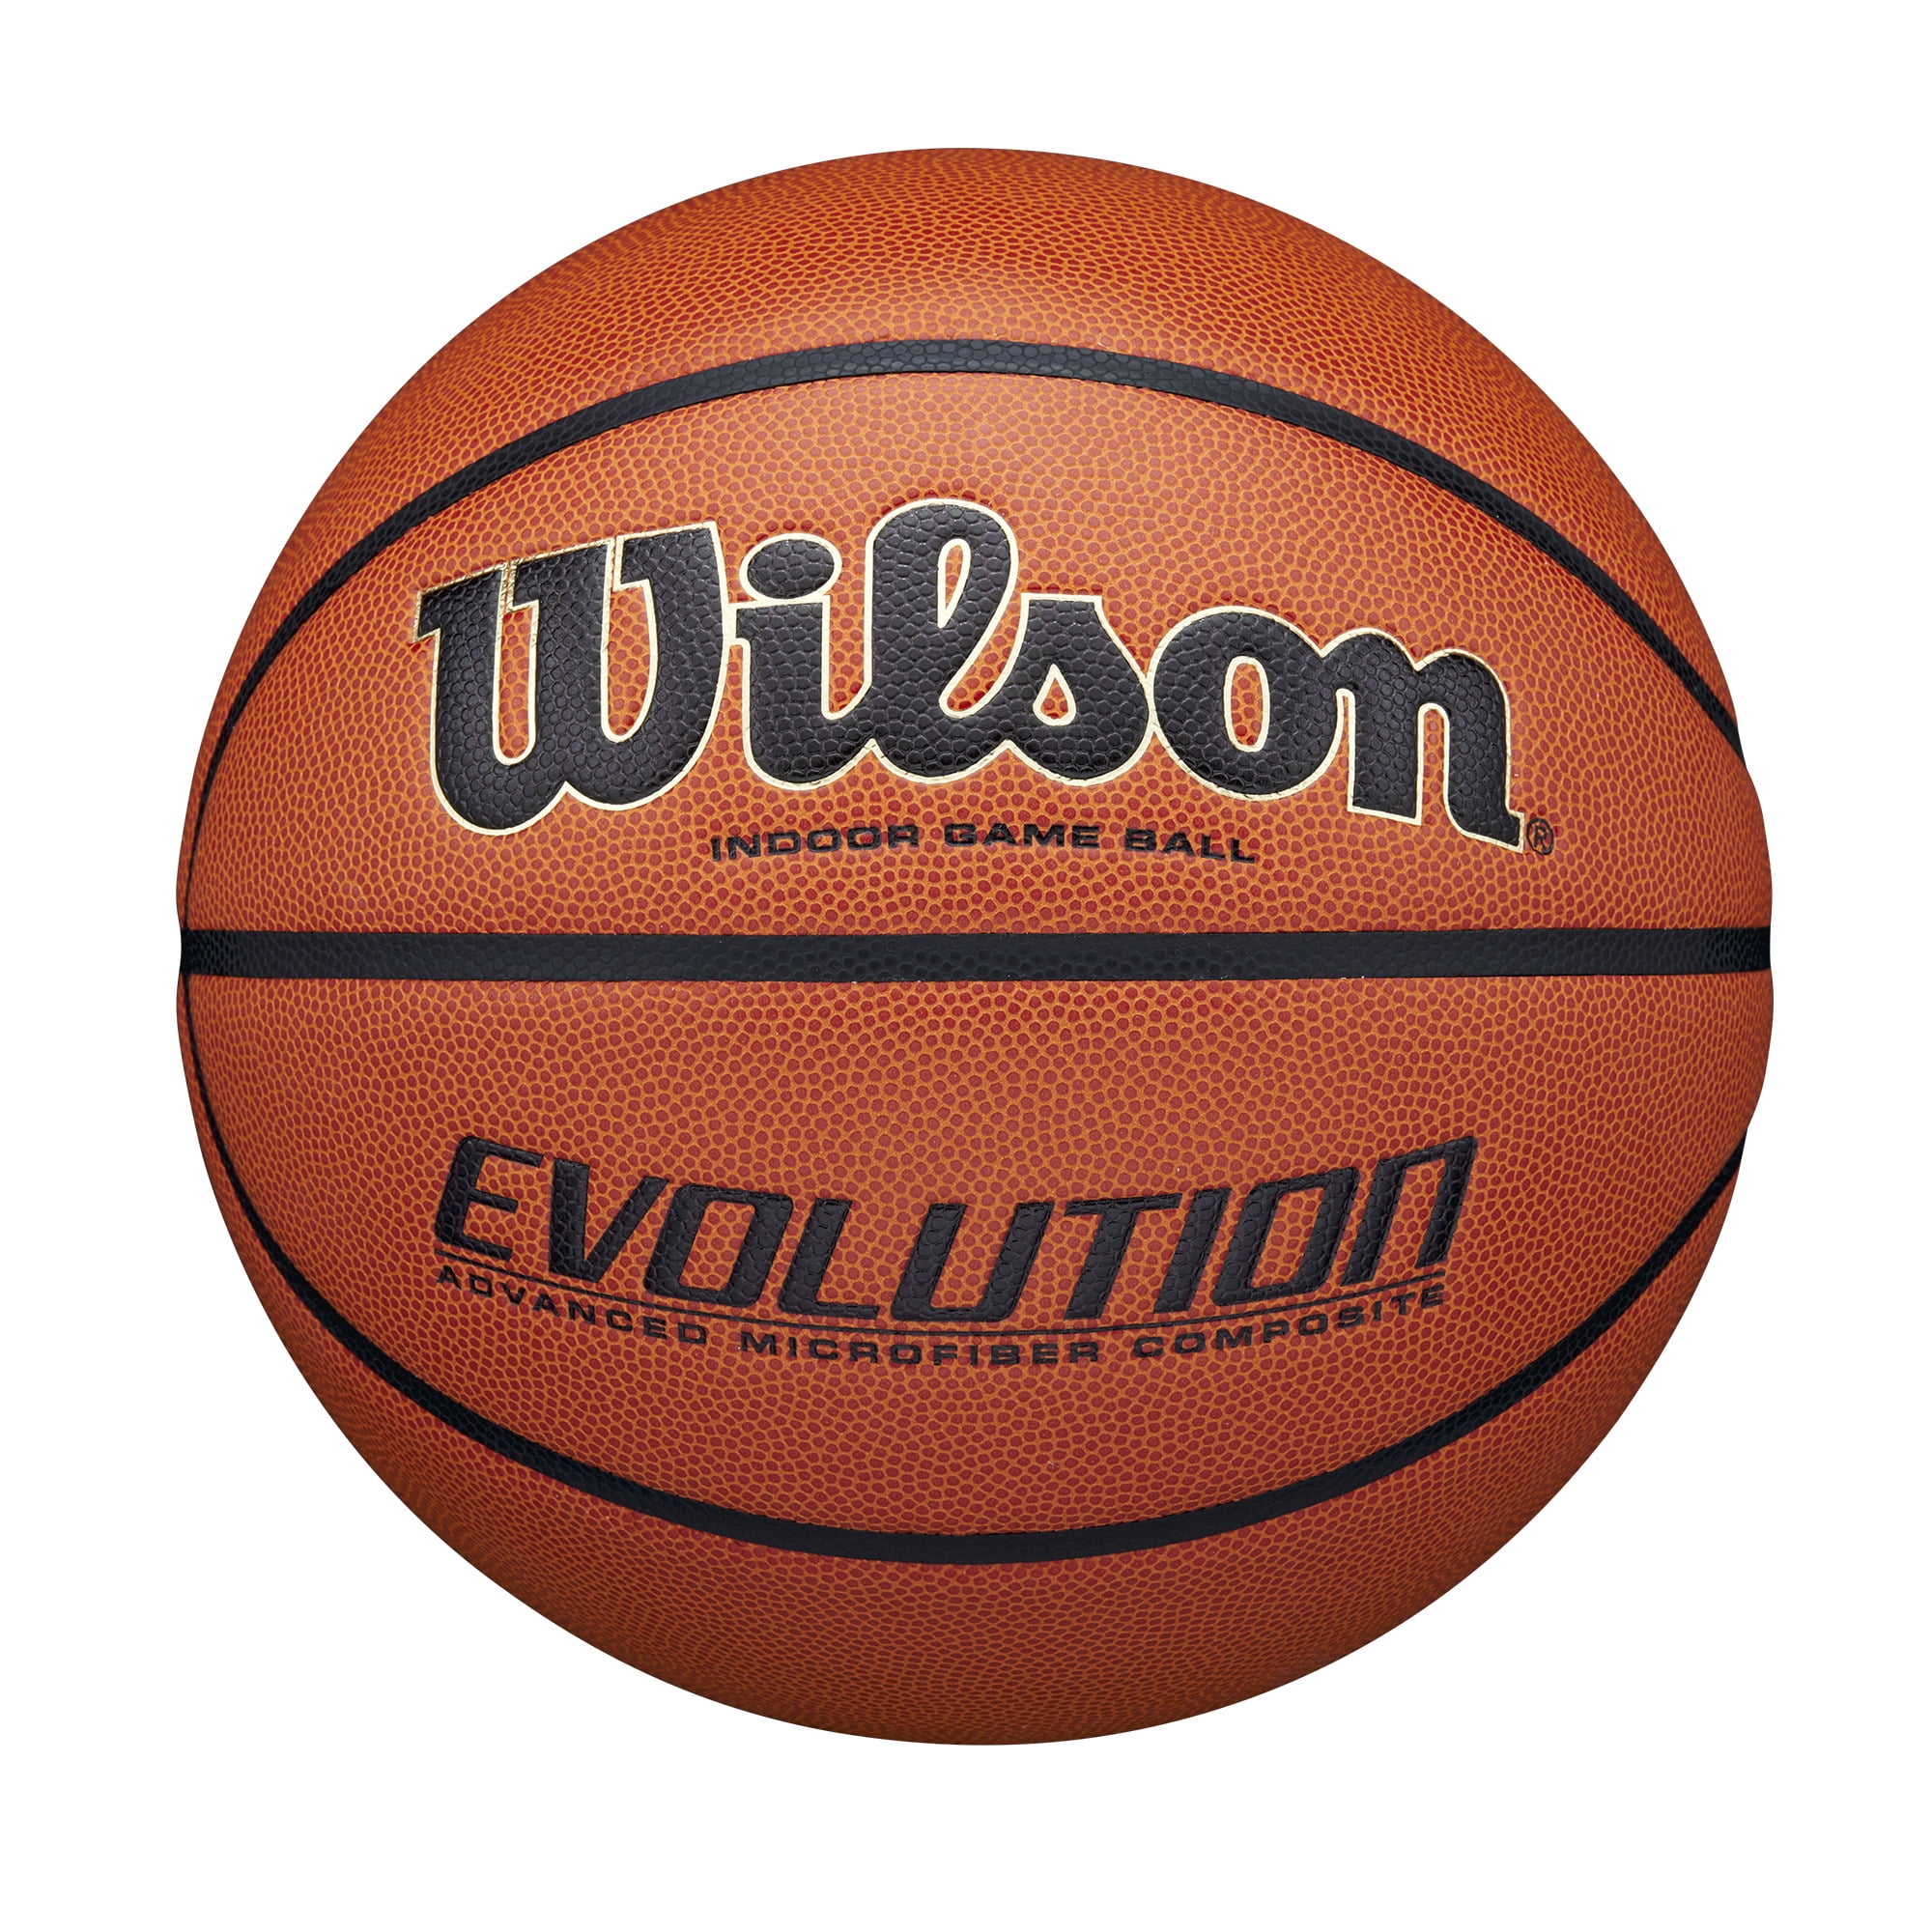 Orange Basketball Size 7 Supplied Deflated 